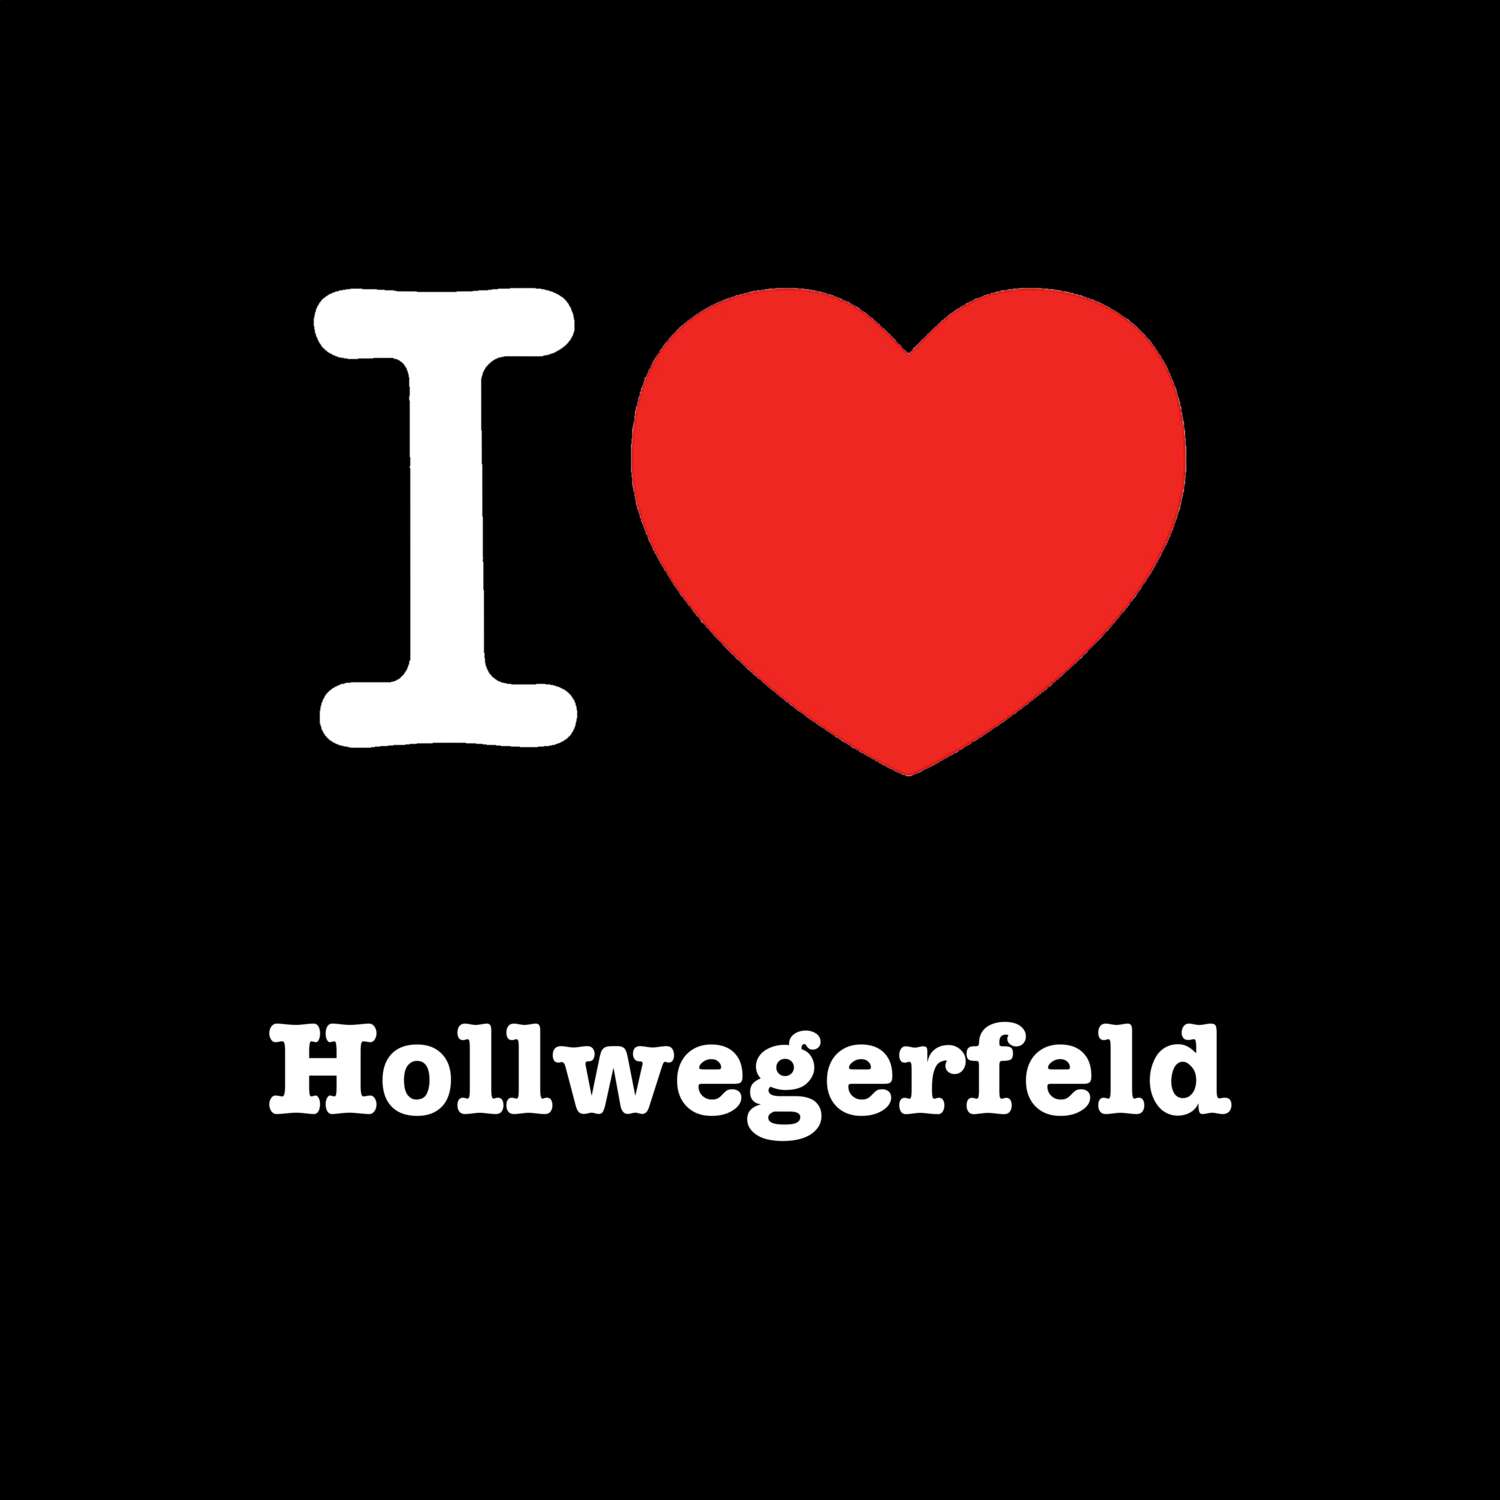 Hollwegerfeld T-Shirt »I love«